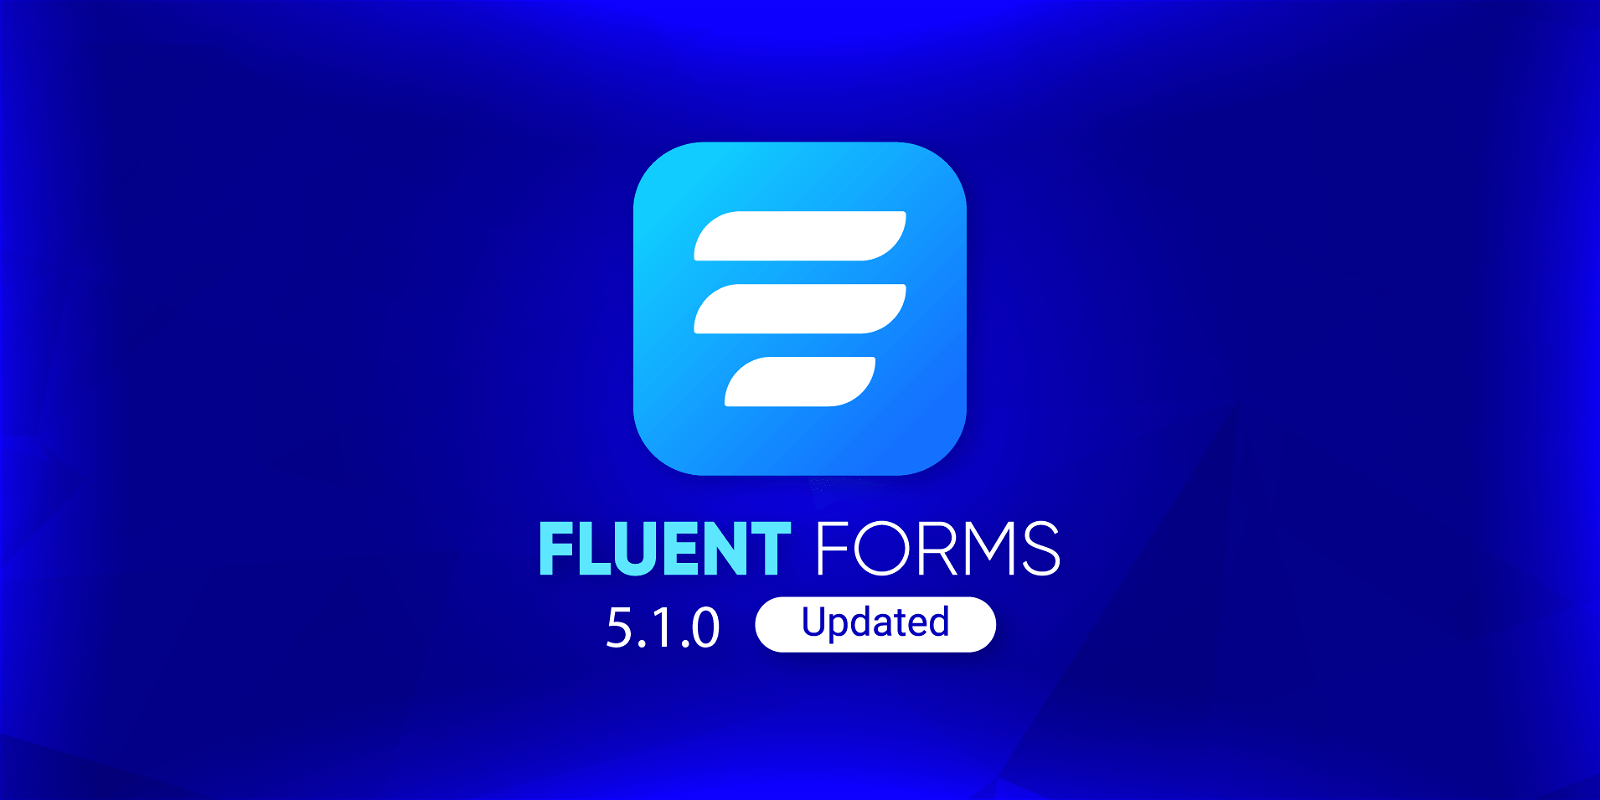 Fluent Forms 5.1